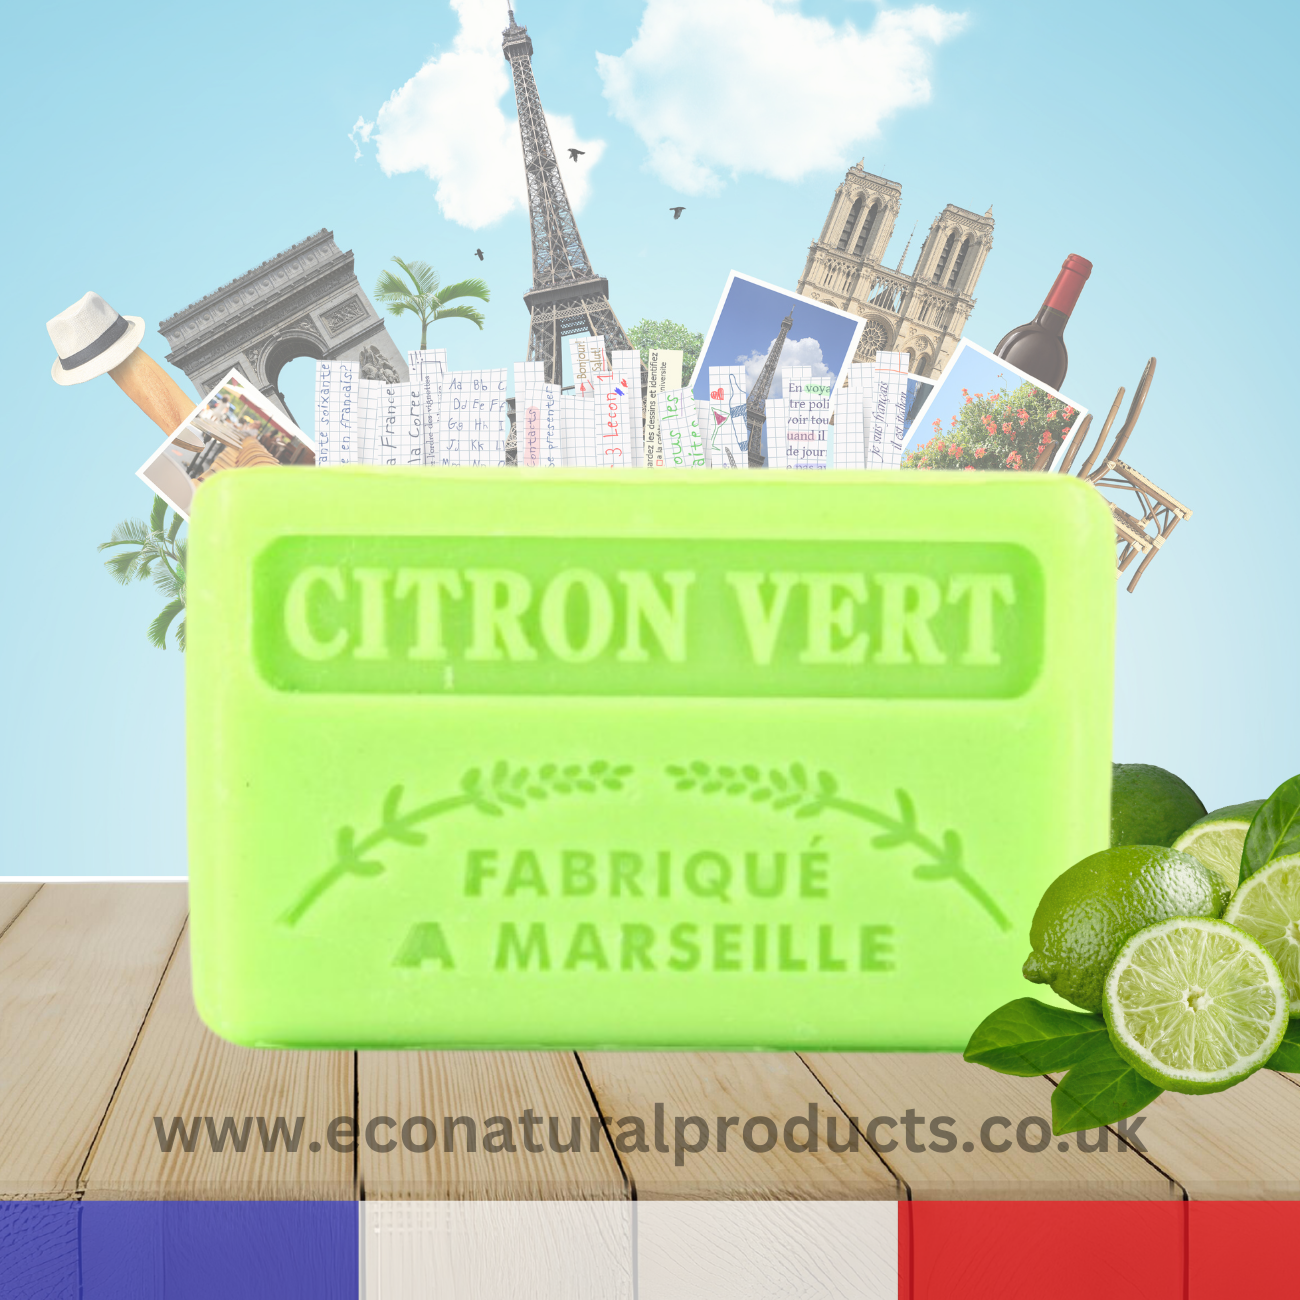 French Marseille Soap Citron Verte (Lime) 125g